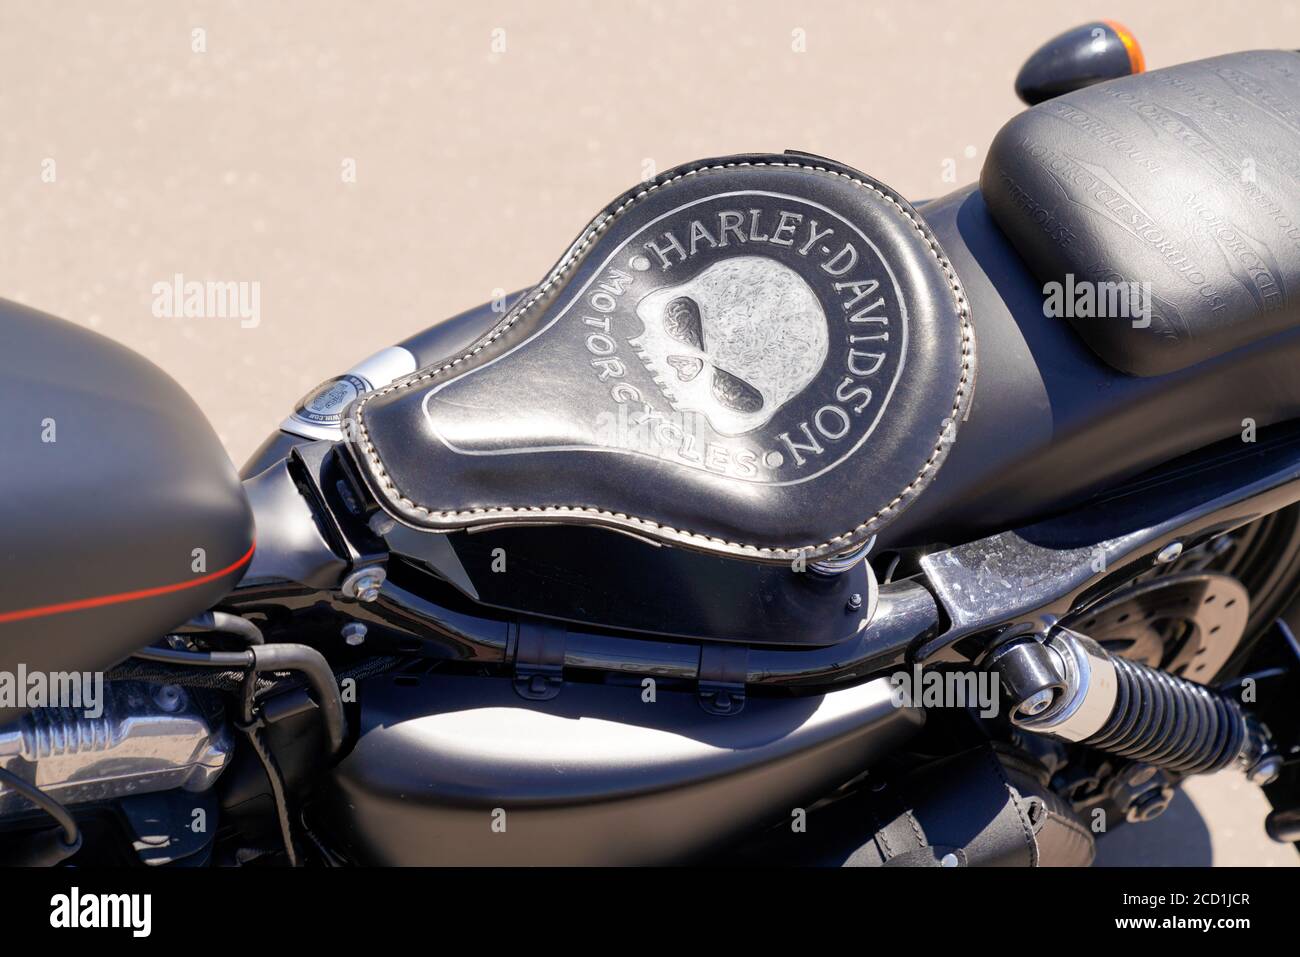 Bordeaux , Aquitaine / France - 08 16 2020 : harley davidson american  motorcycle Bobber Seats and Motorbike Saddle Stock Photo - Alamy